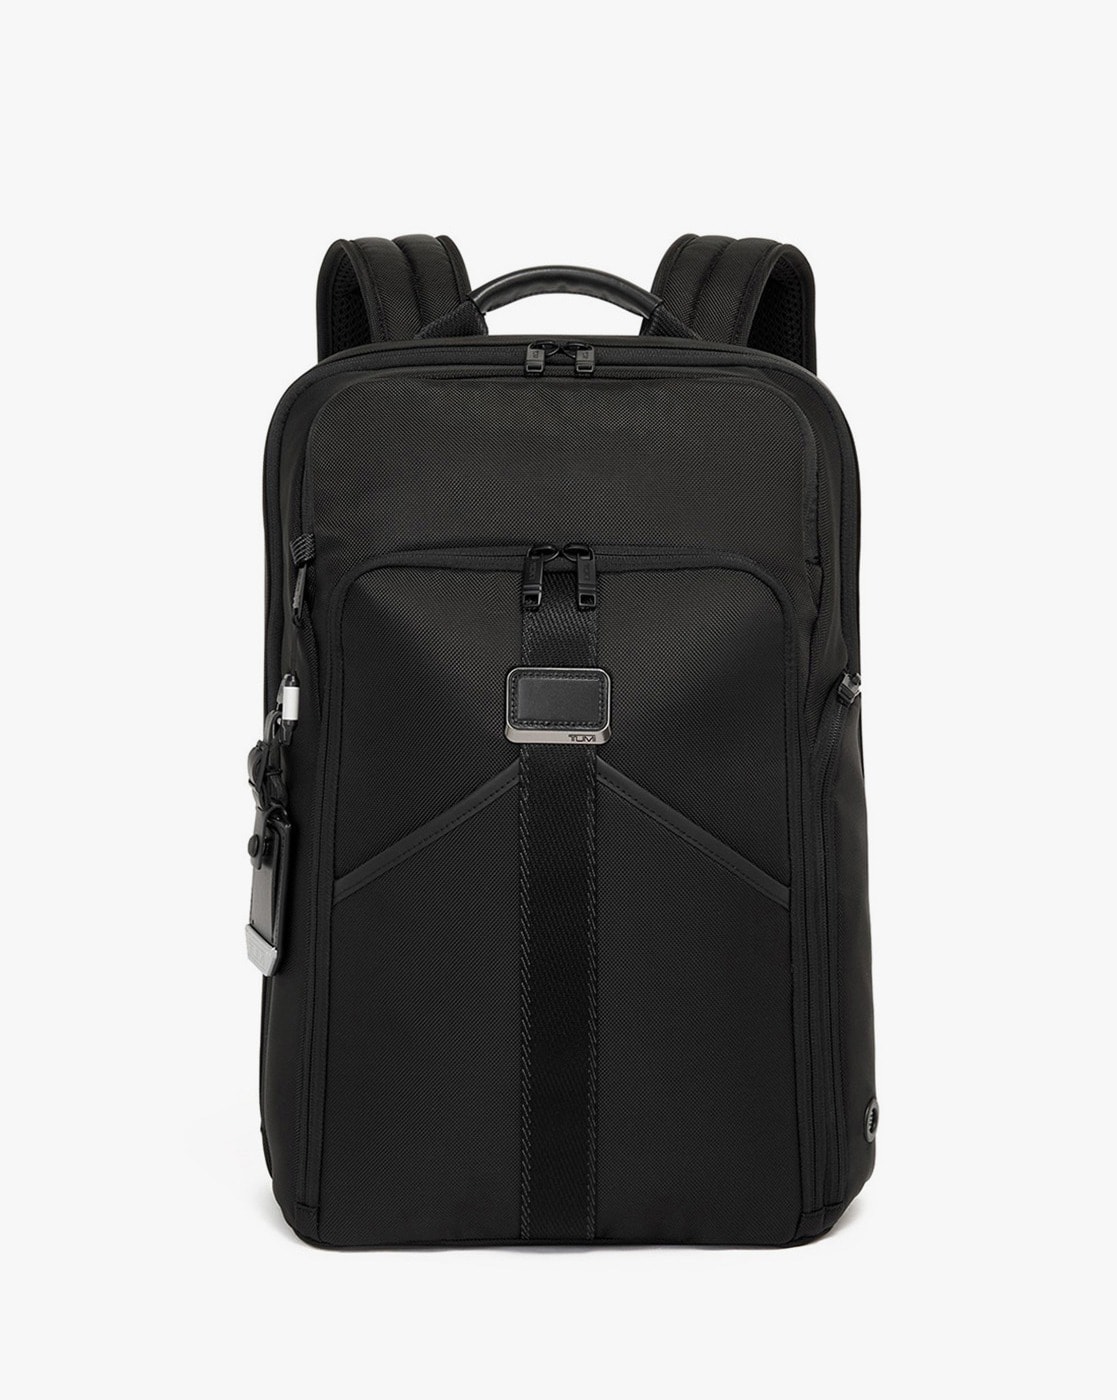 Tumi 16 inch Laptop Backpack Black 70834 - Price in India | Flipkart.com